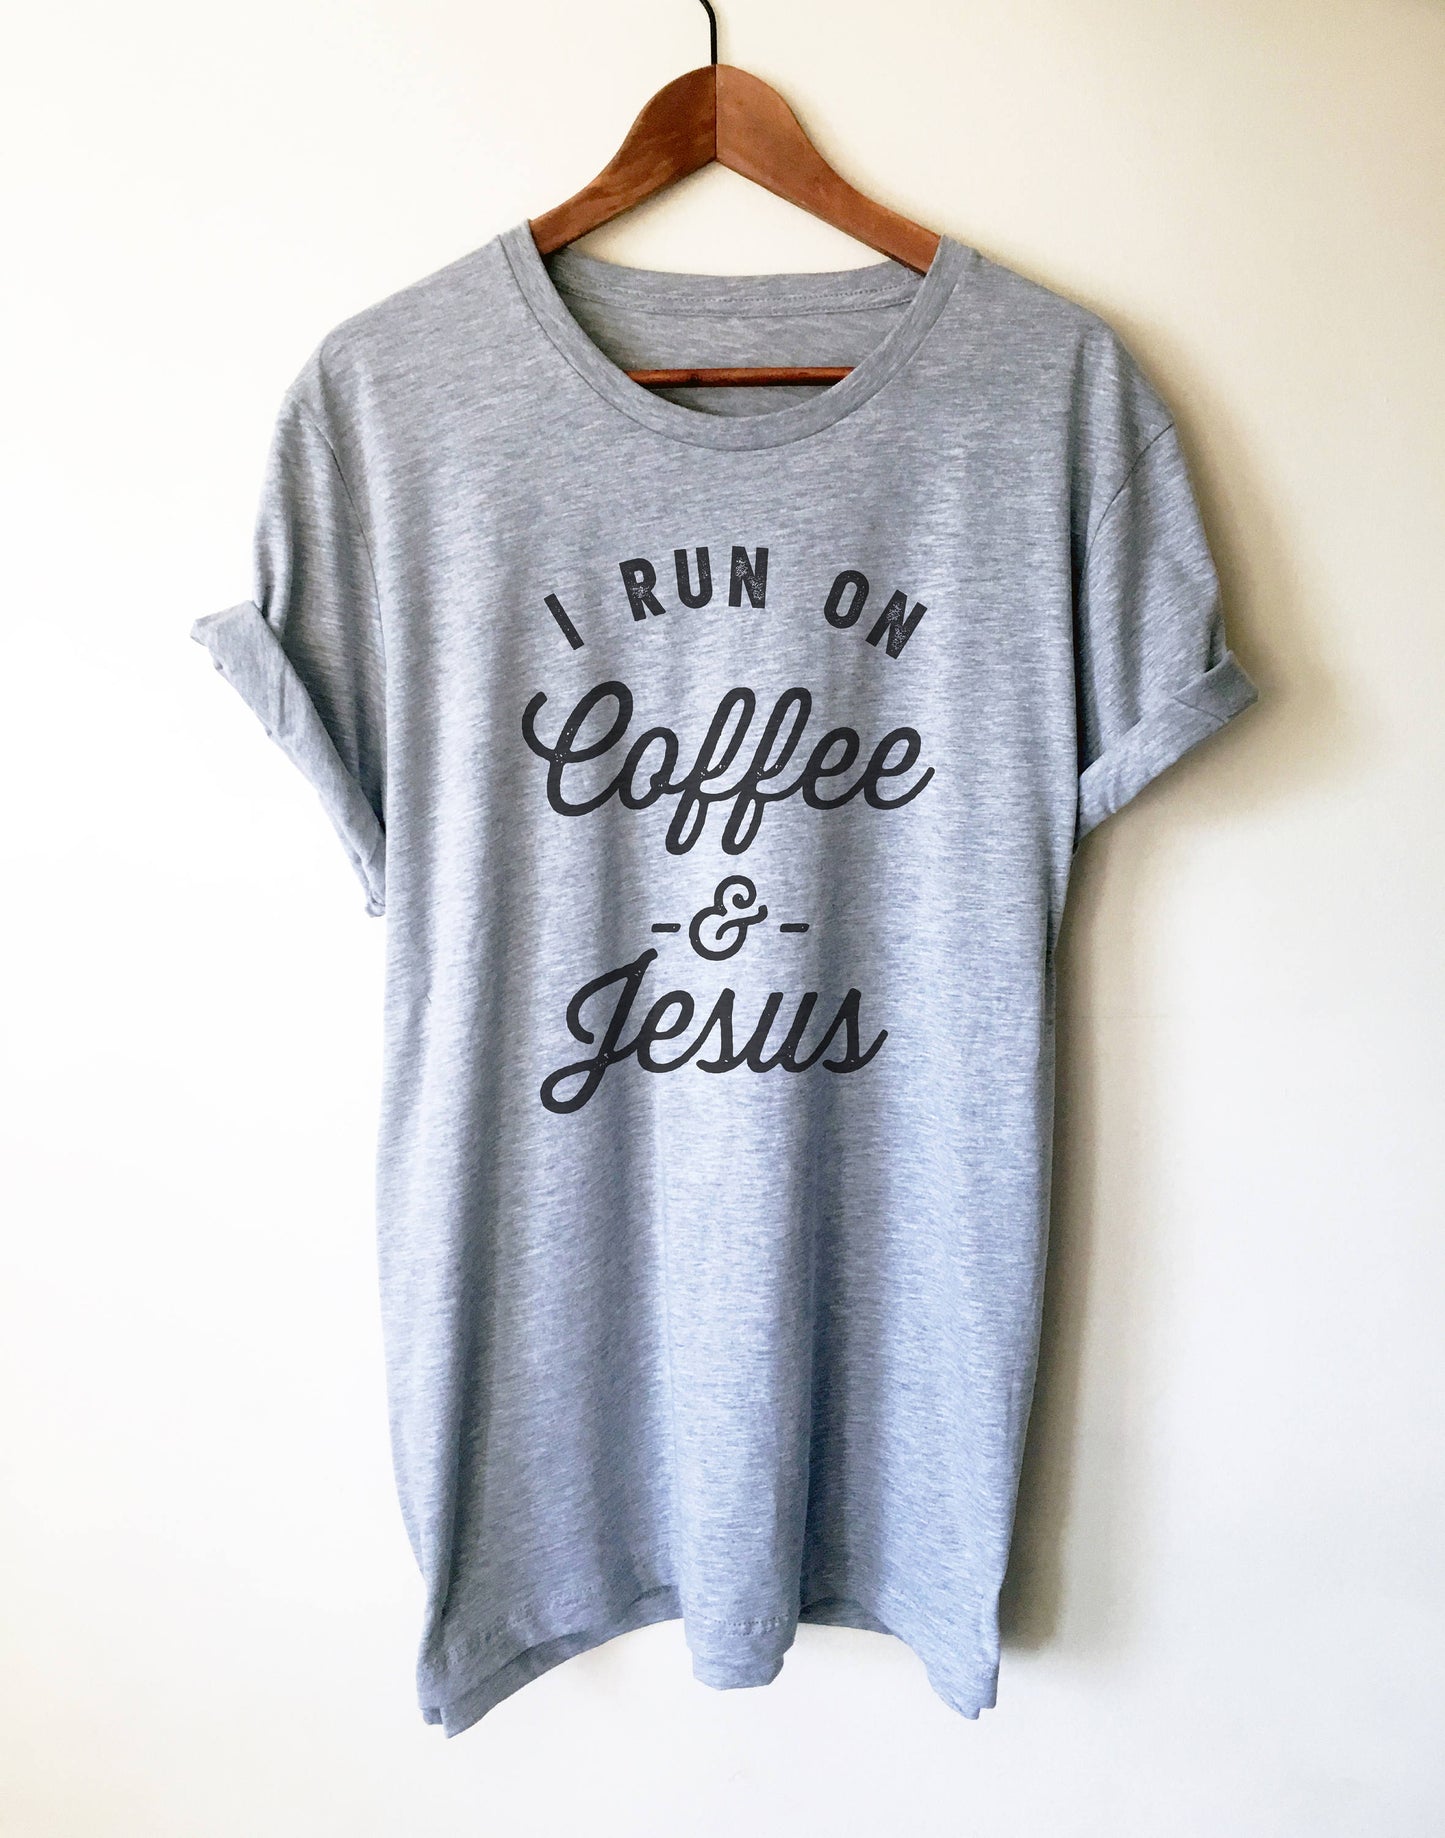 I Run On Coffee & Jesus Unisex Shirt - Jesus And Coffee, Coffee And Jesus, Jesus Shirt, Christian T-shirt, Whole Lot Of Jesus, Bible Verse